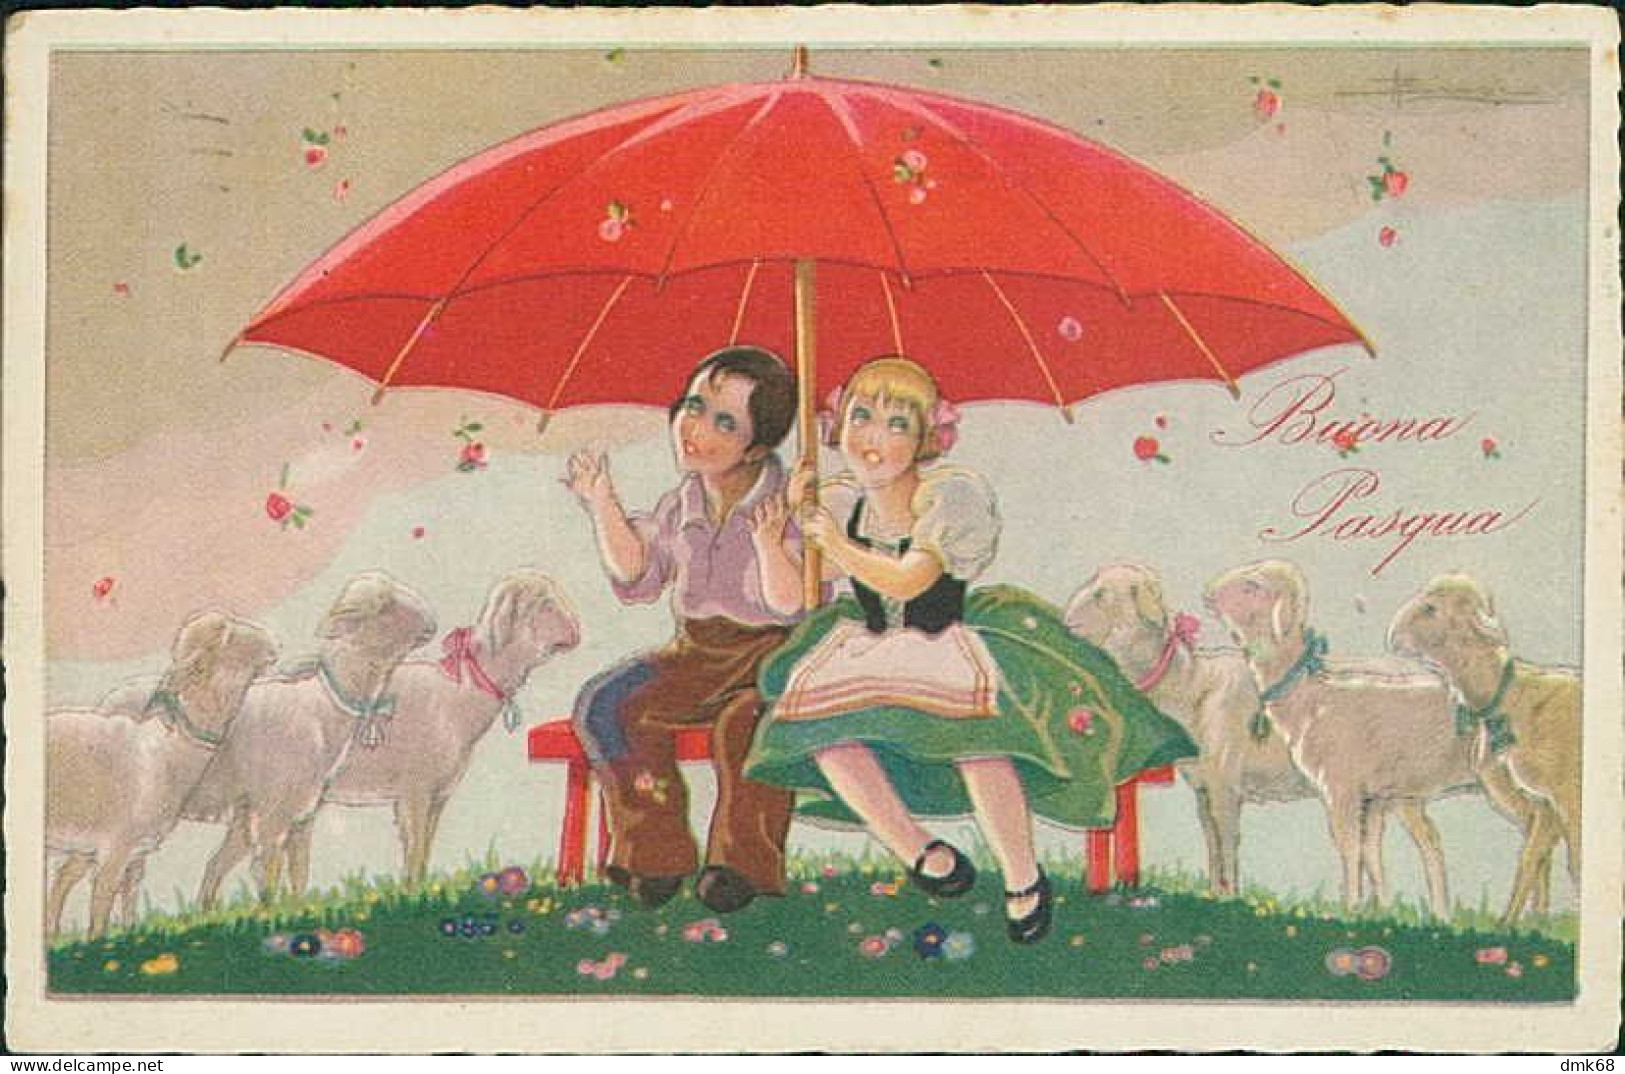 BUSI SIGNED 1920s  POSTCARD - BOY & GIRL UNDER BIG RED UMBRELLA & SHEEPS - EDITION DEGAMI N. 56  (4630) - Busi, Adolfo